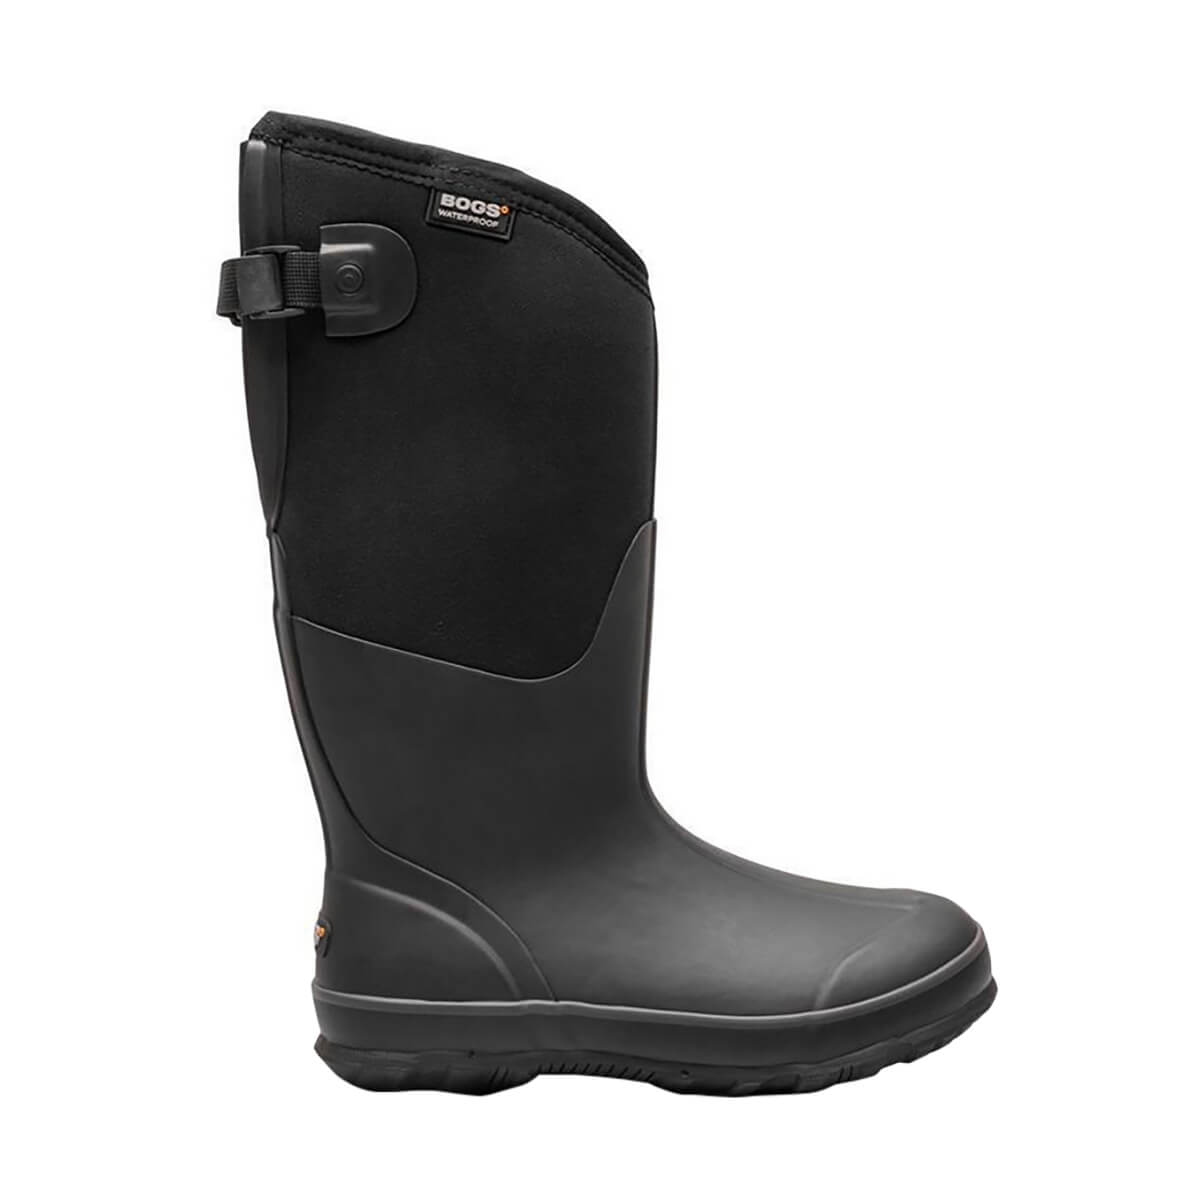 Bogs Outdoor Boots Women's Durable Adjust Eco-friendly - Black